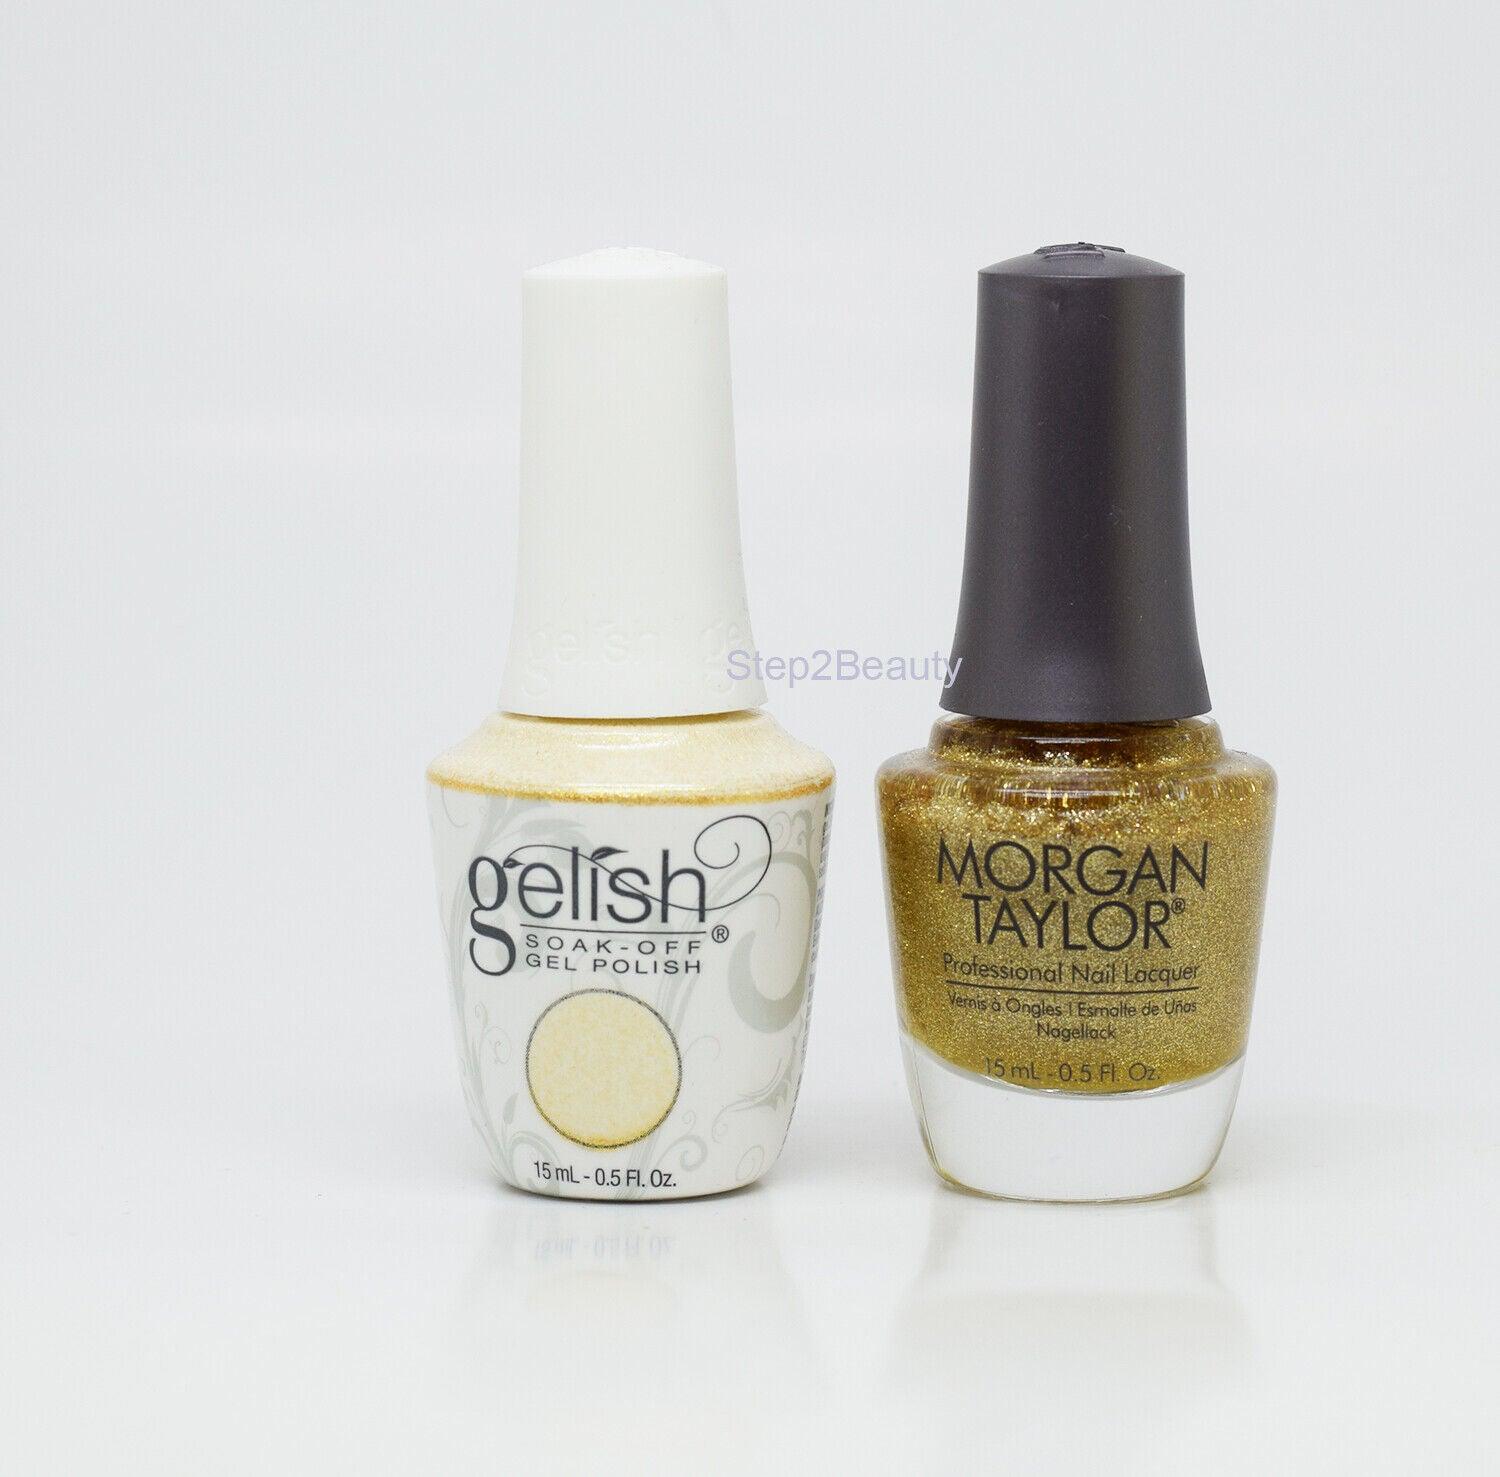 Gelish DUO Soak Off Gel Polish + Morgan Taylor Lacquer - #837 Bronzed